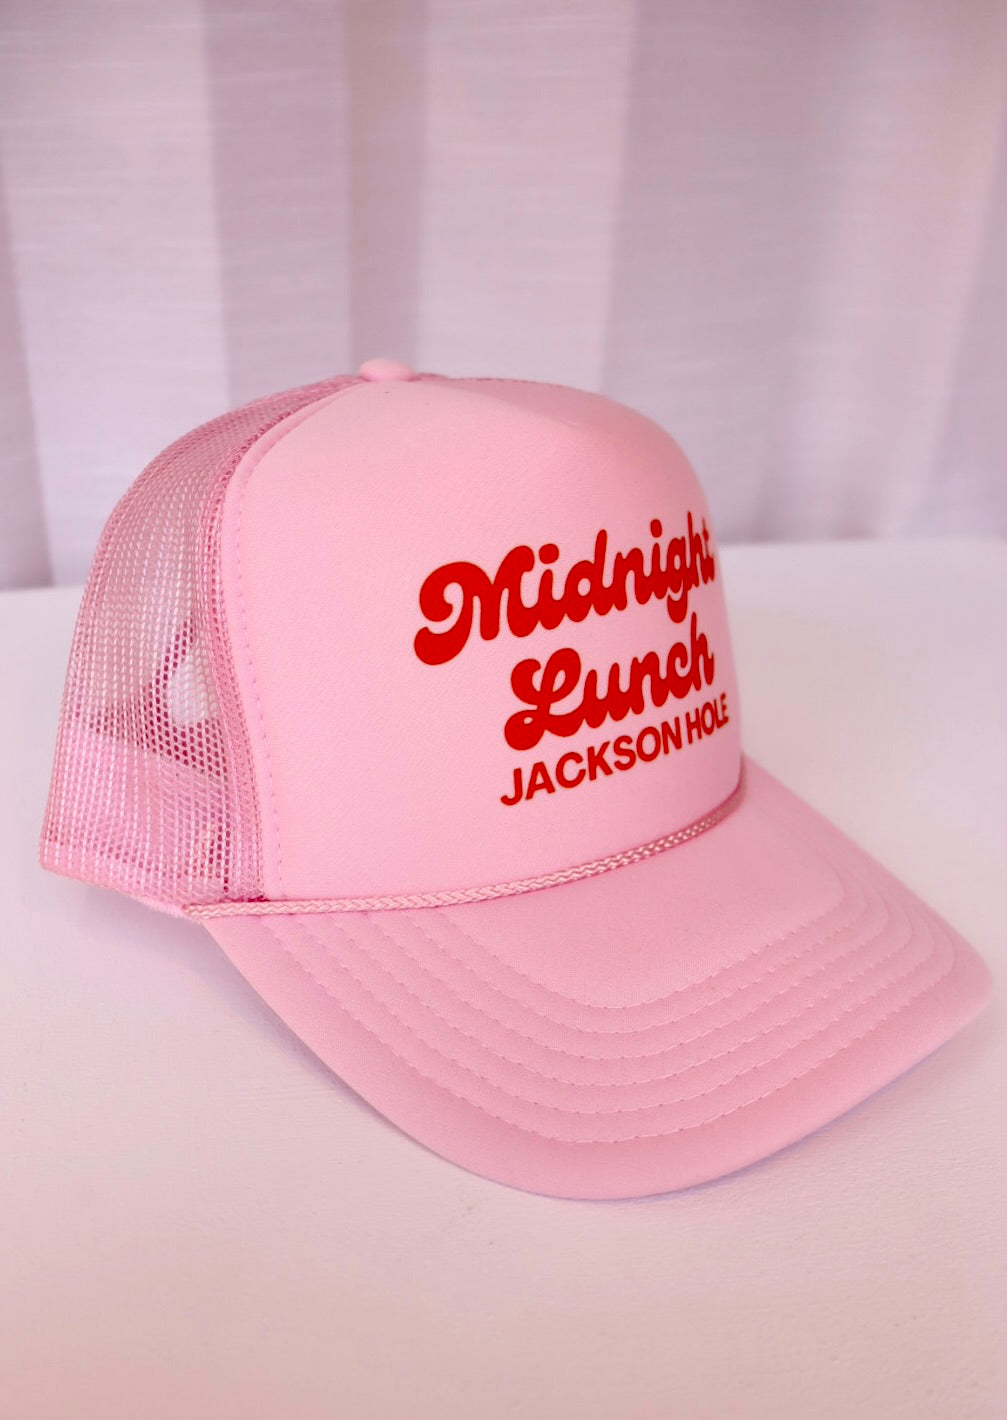 Jackson Hole Trucker Hat | Pink + Red